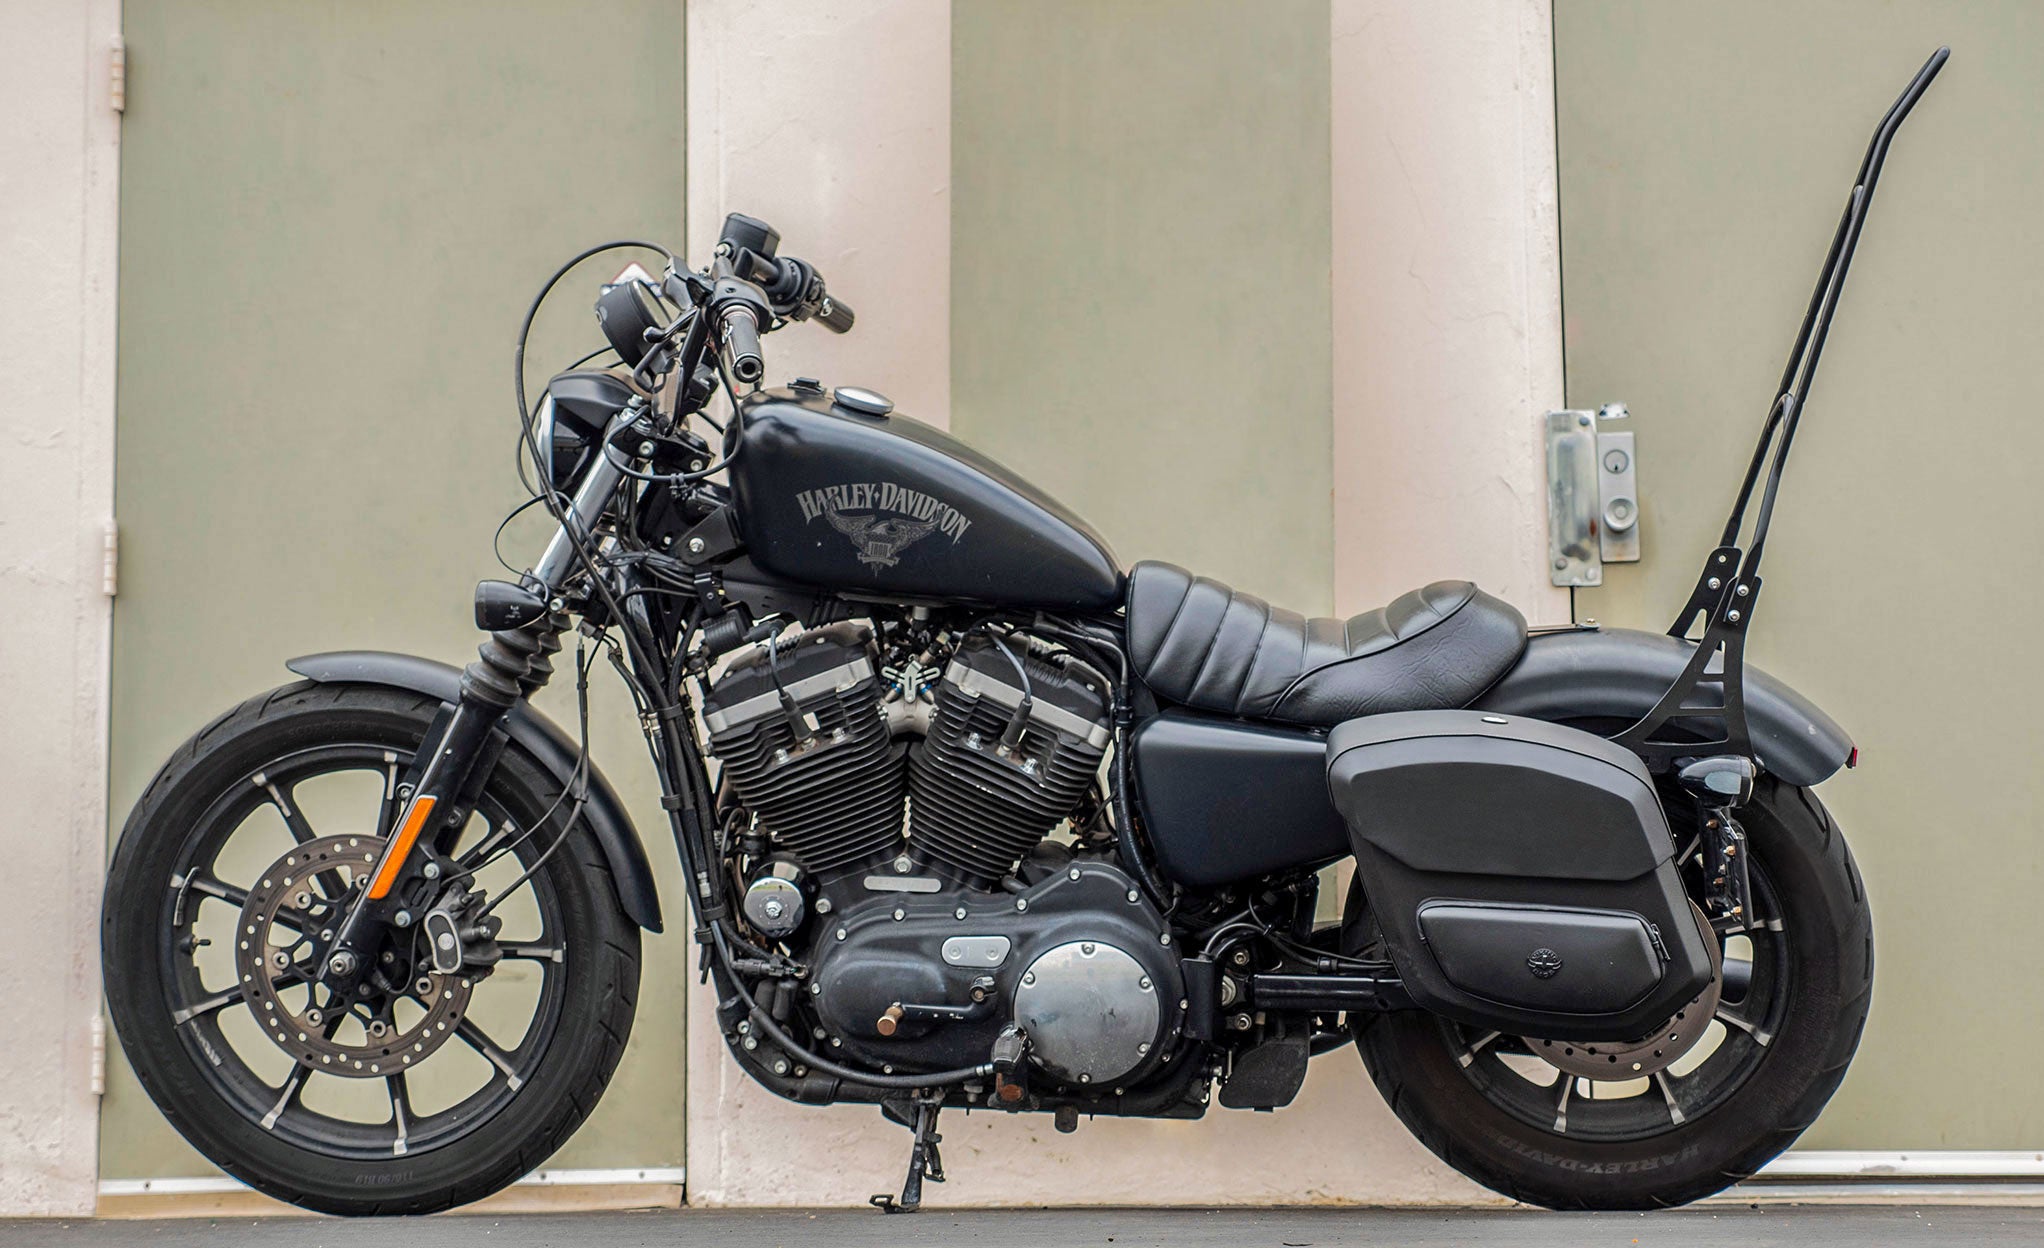 20L - Ironclad Quick Mount Medium Harley Sportster 883 Iron XL883N Hard Solo Saddlebag (Left Only) @expand